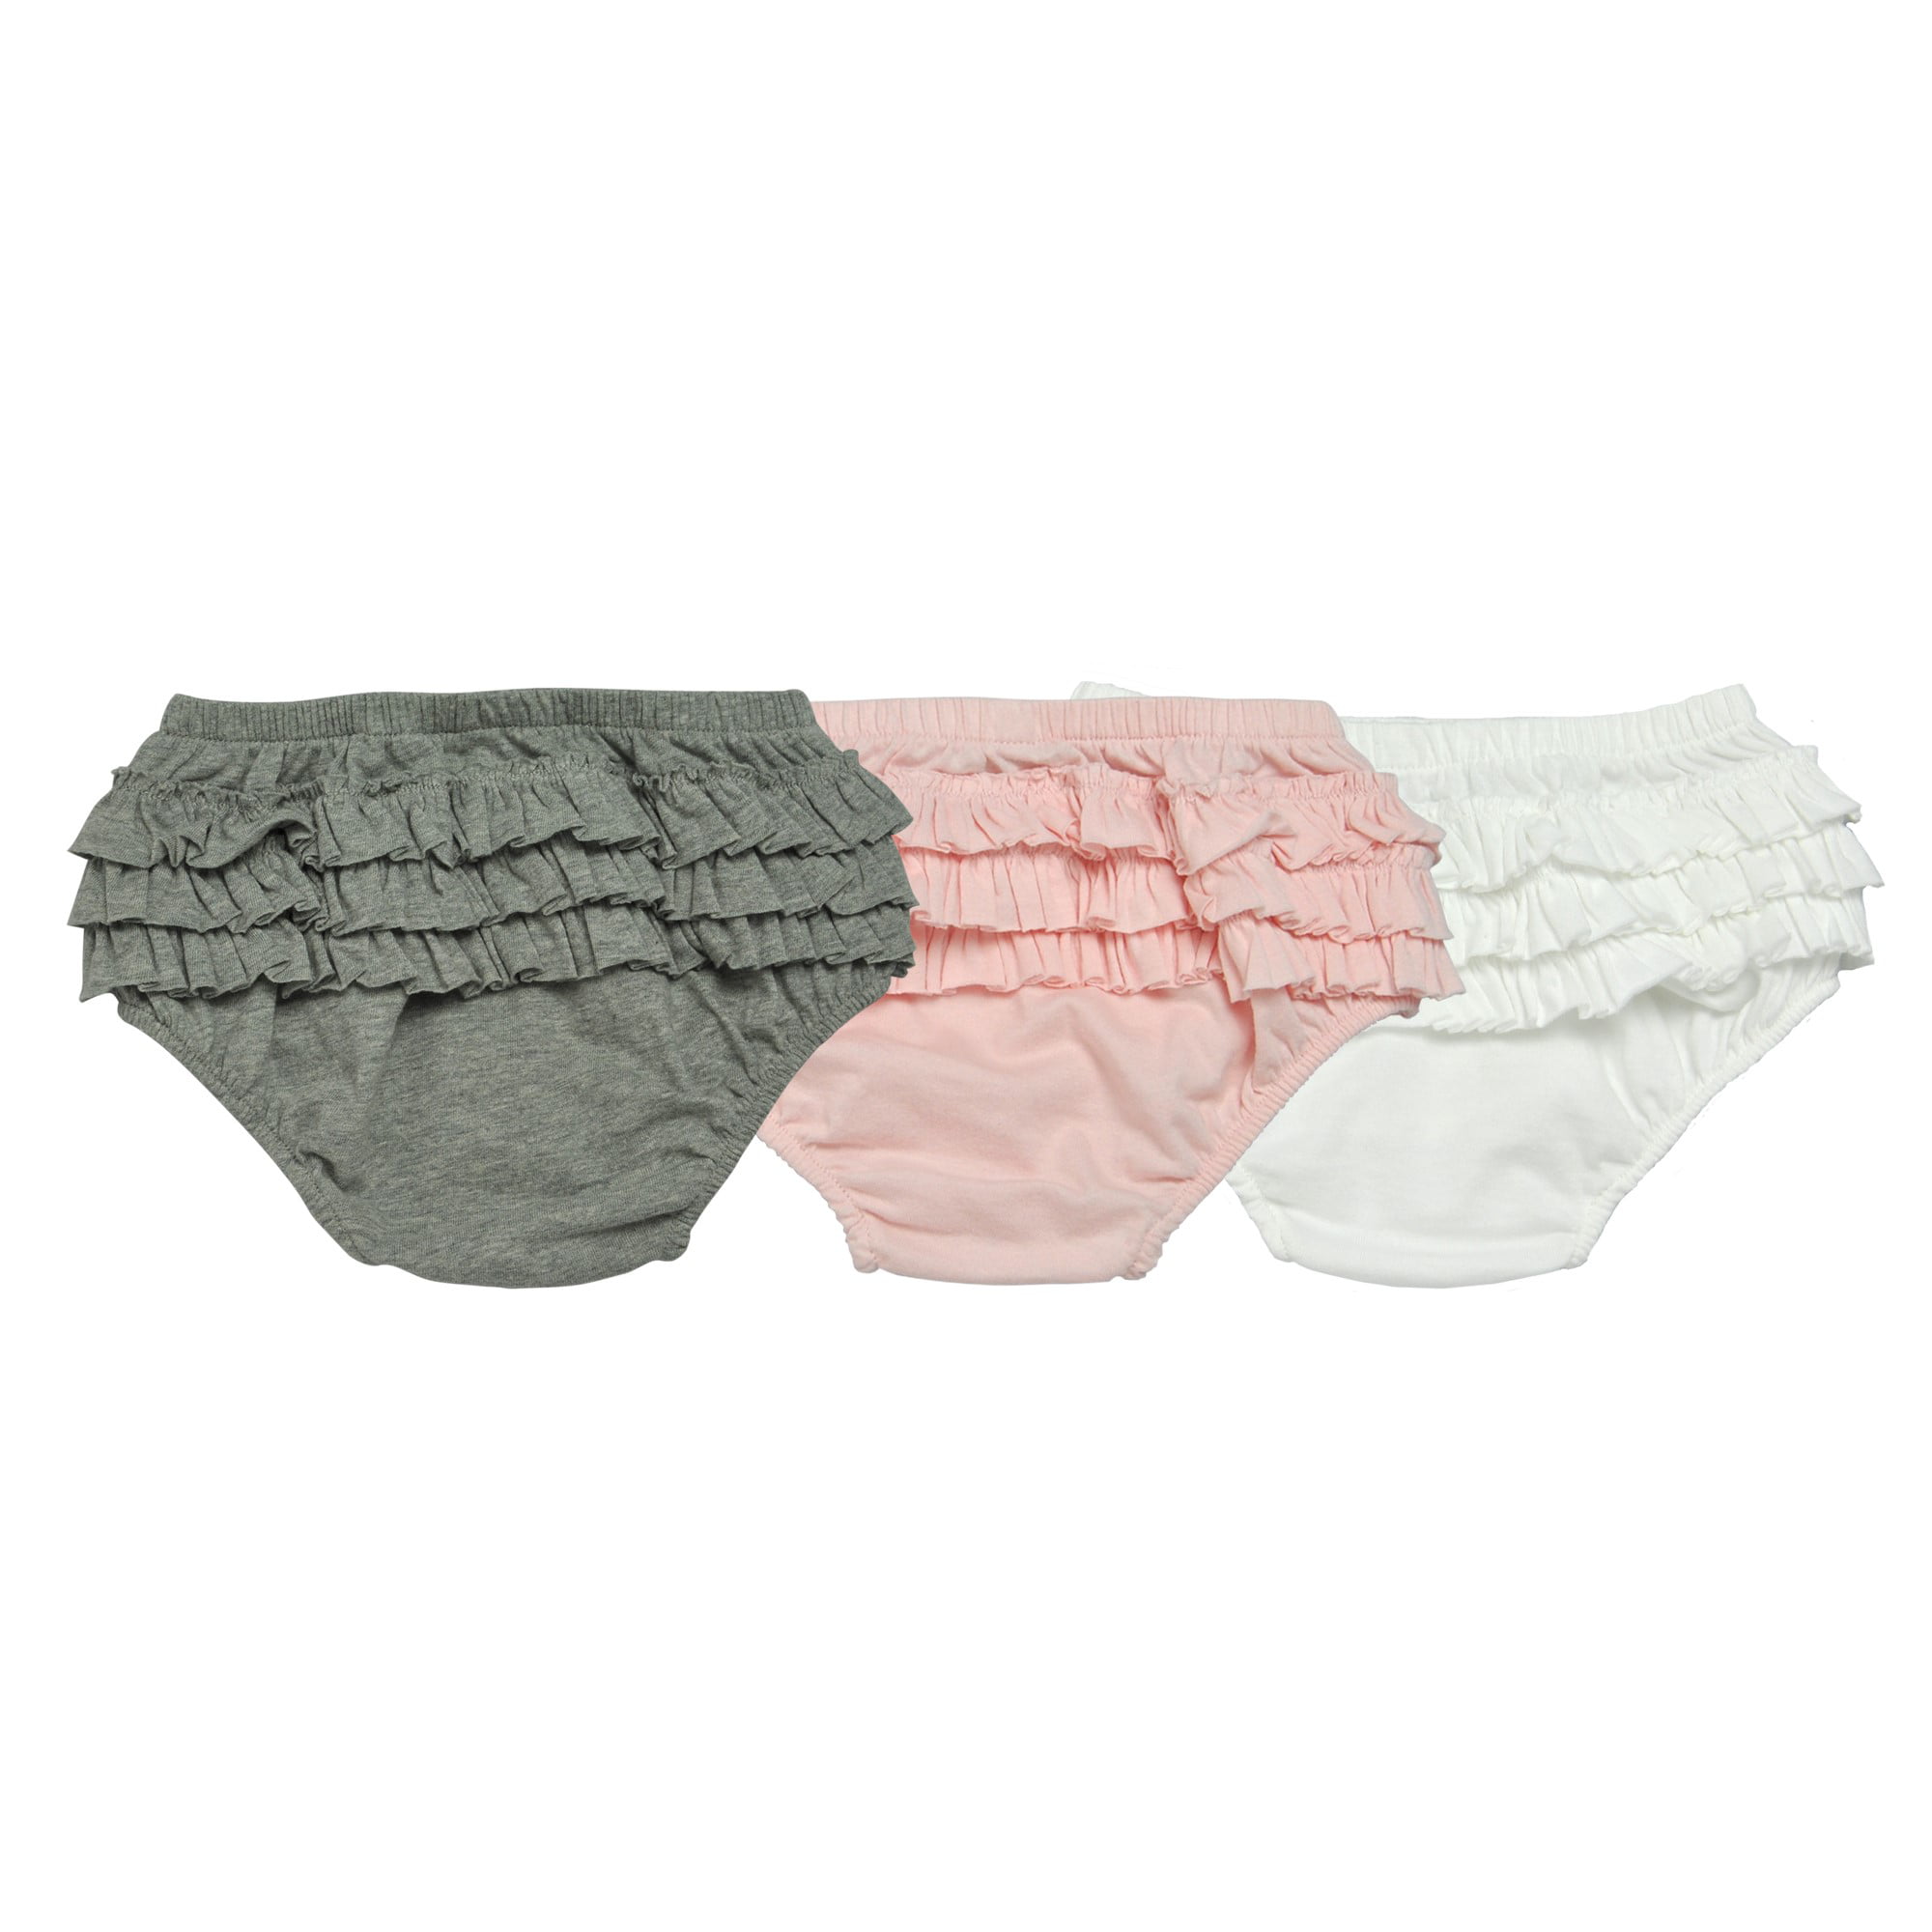 Organic Ruffle Diaper Covers, Multi-Colored, 24M, 3 Ct 